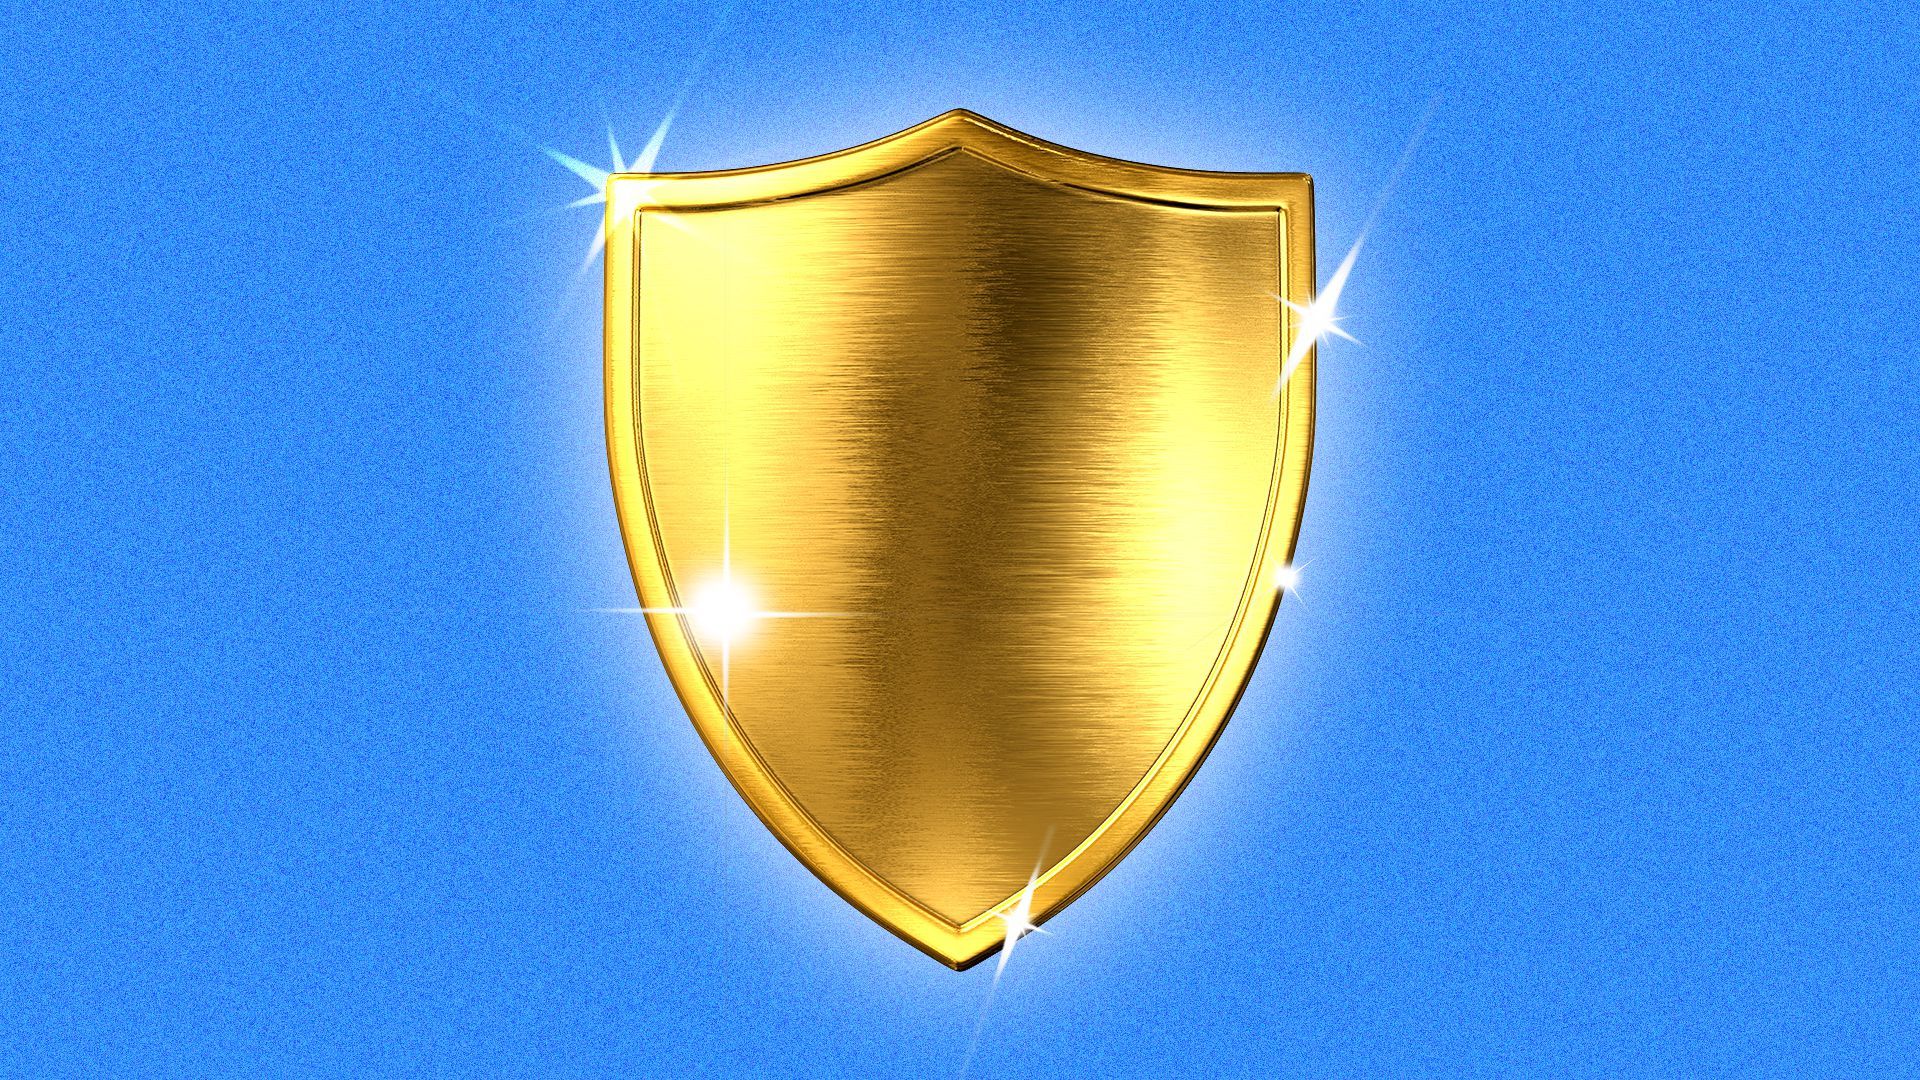 Illustration of a golden shield